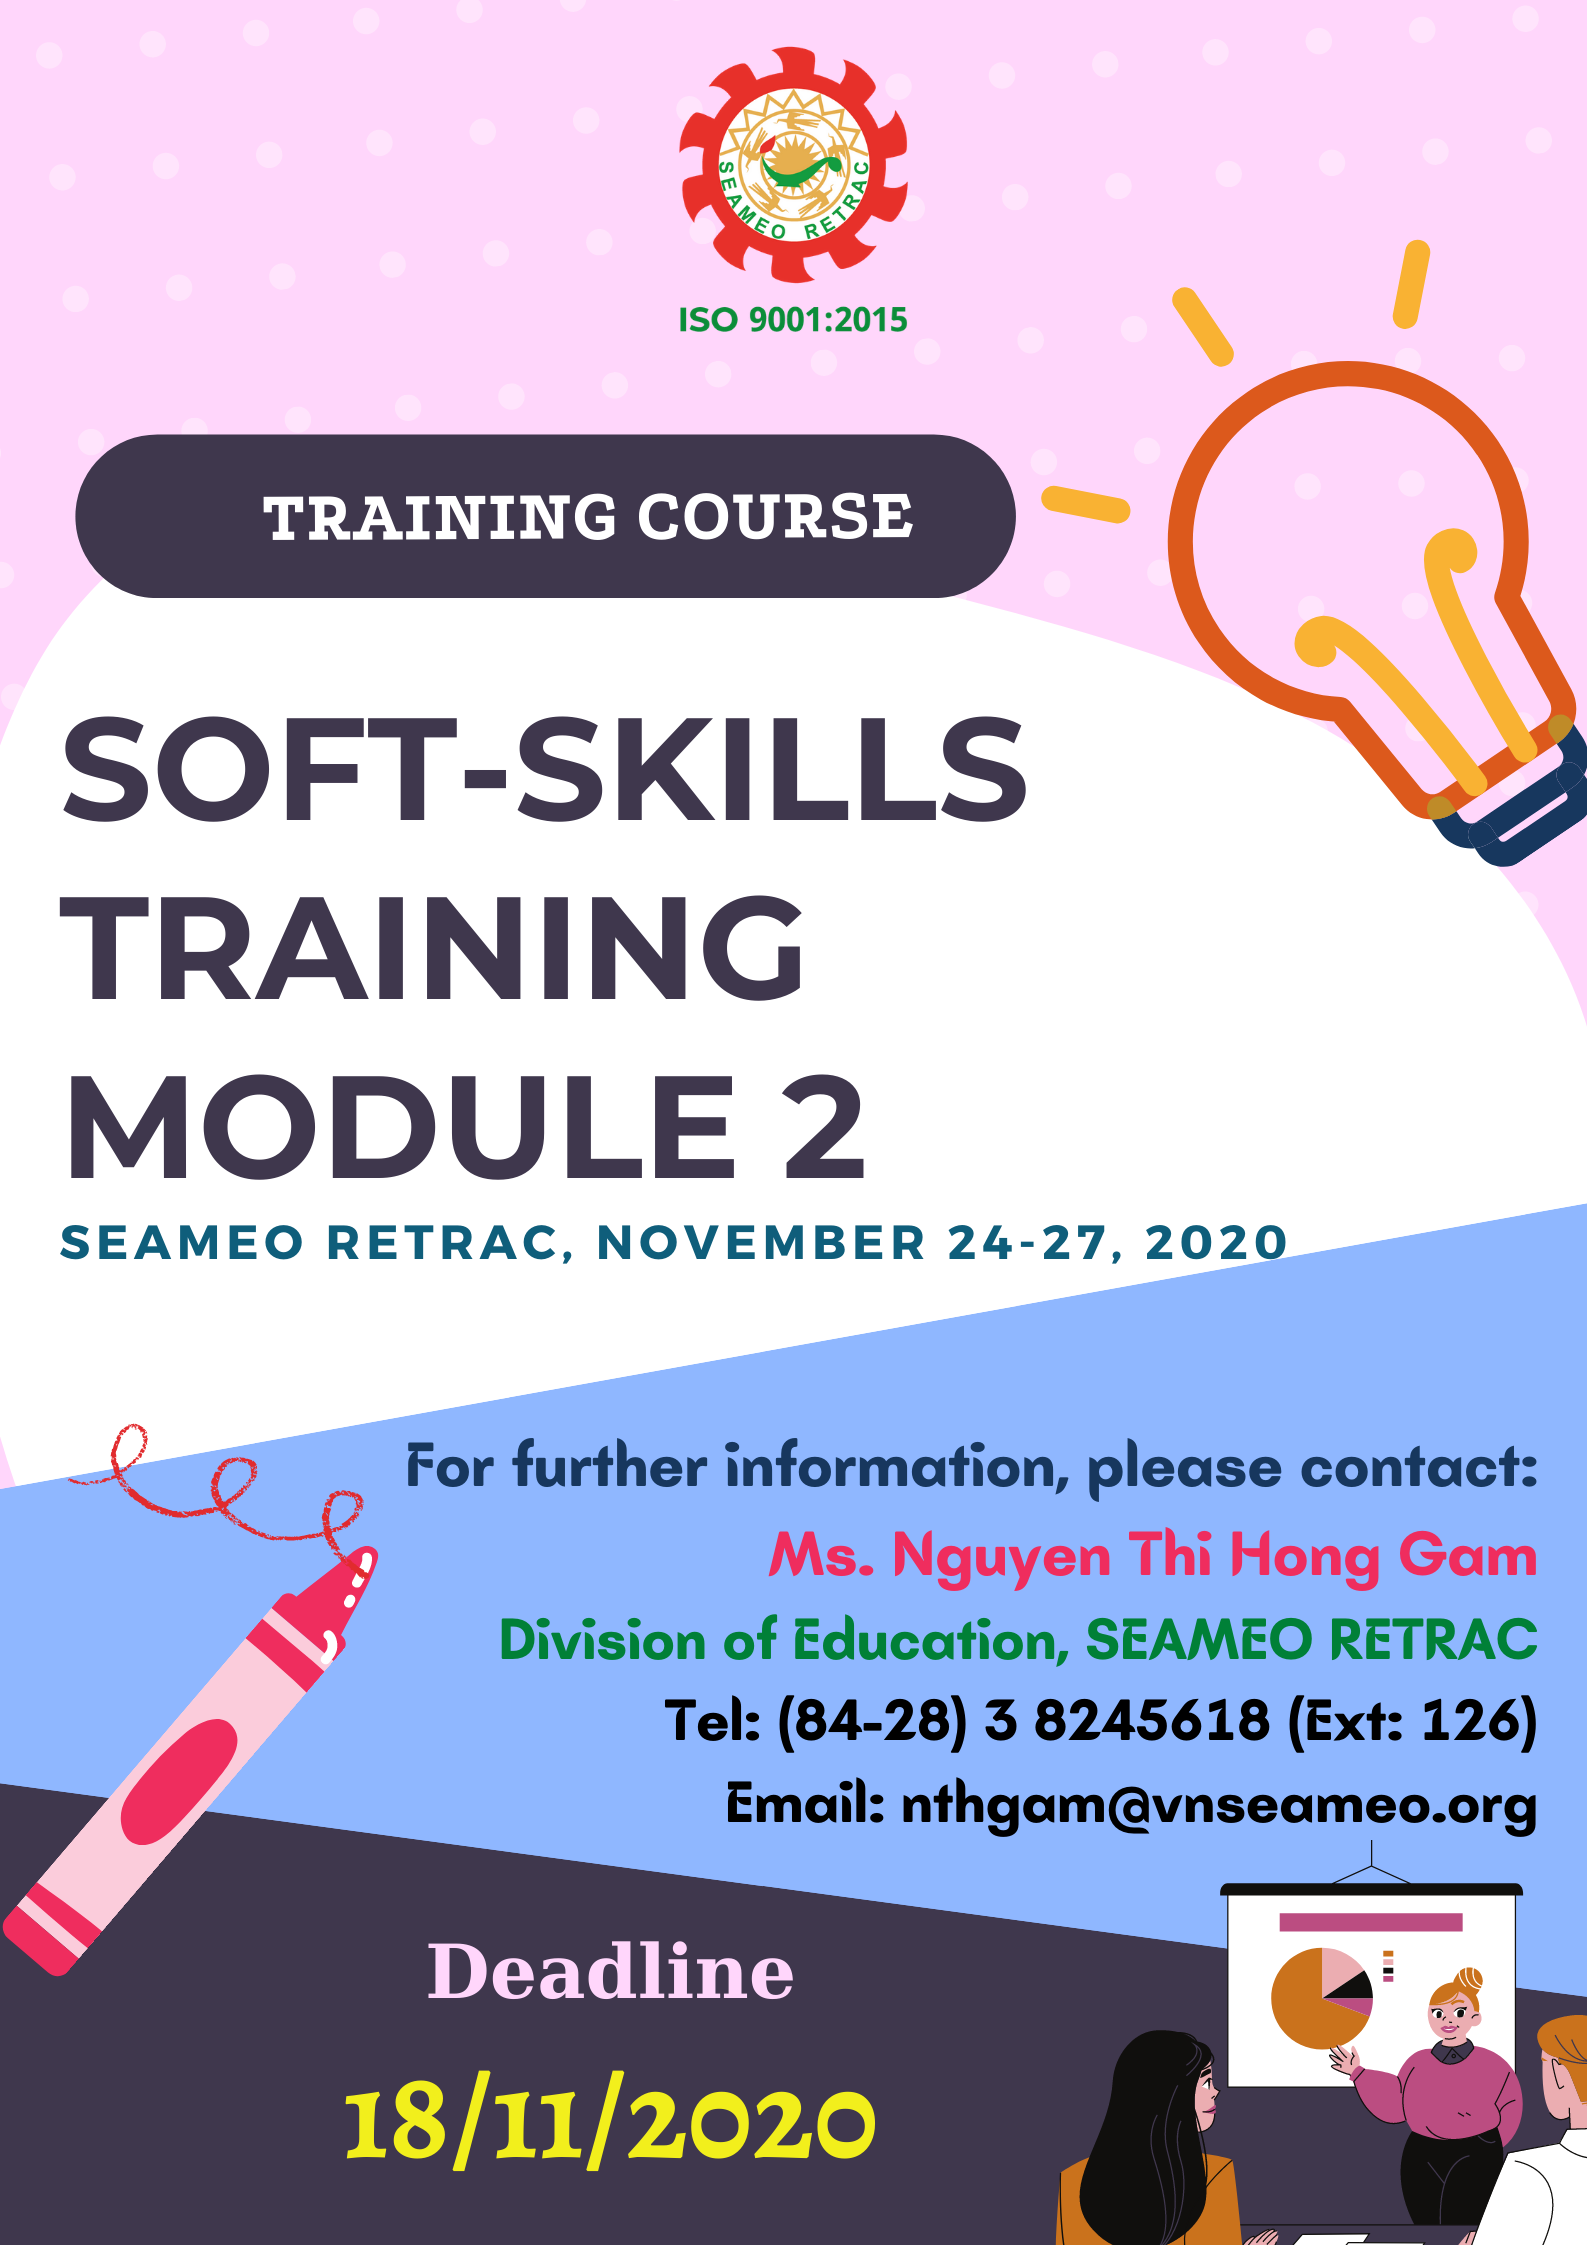 Training course on “Soft-Skills Training – Module 2”